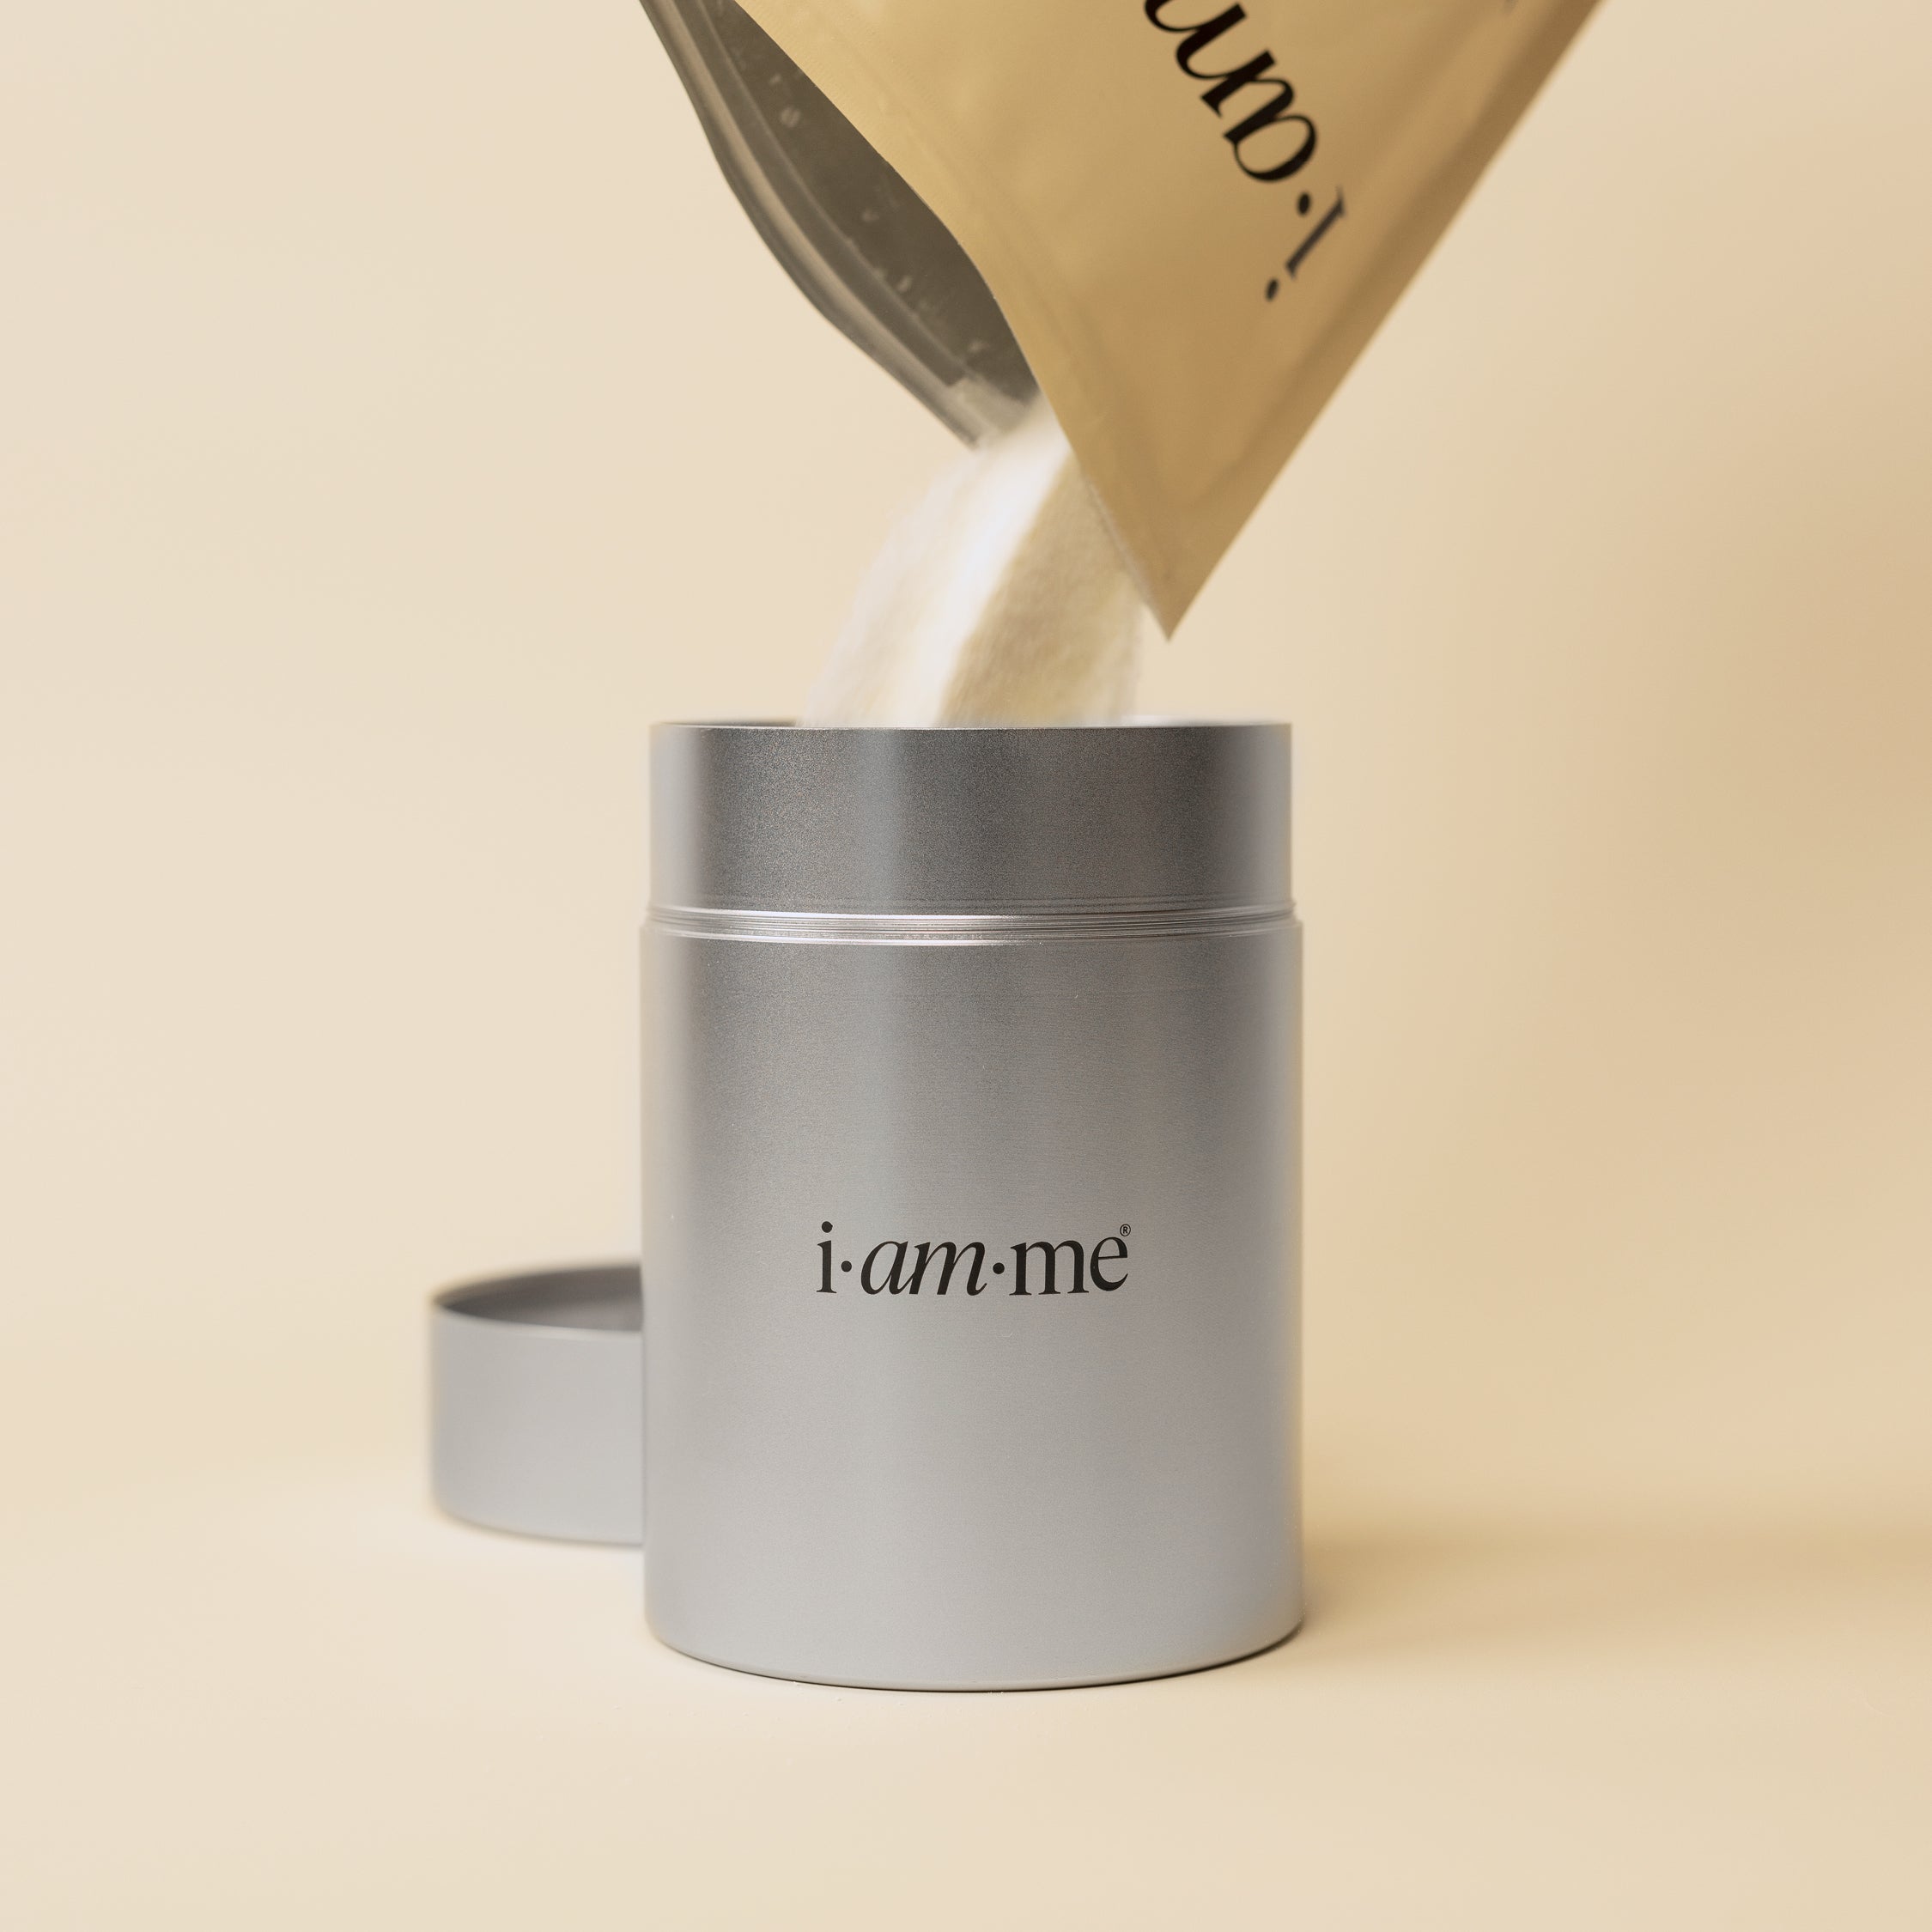 i.am.me | Vanilla Beauty Starter Kit